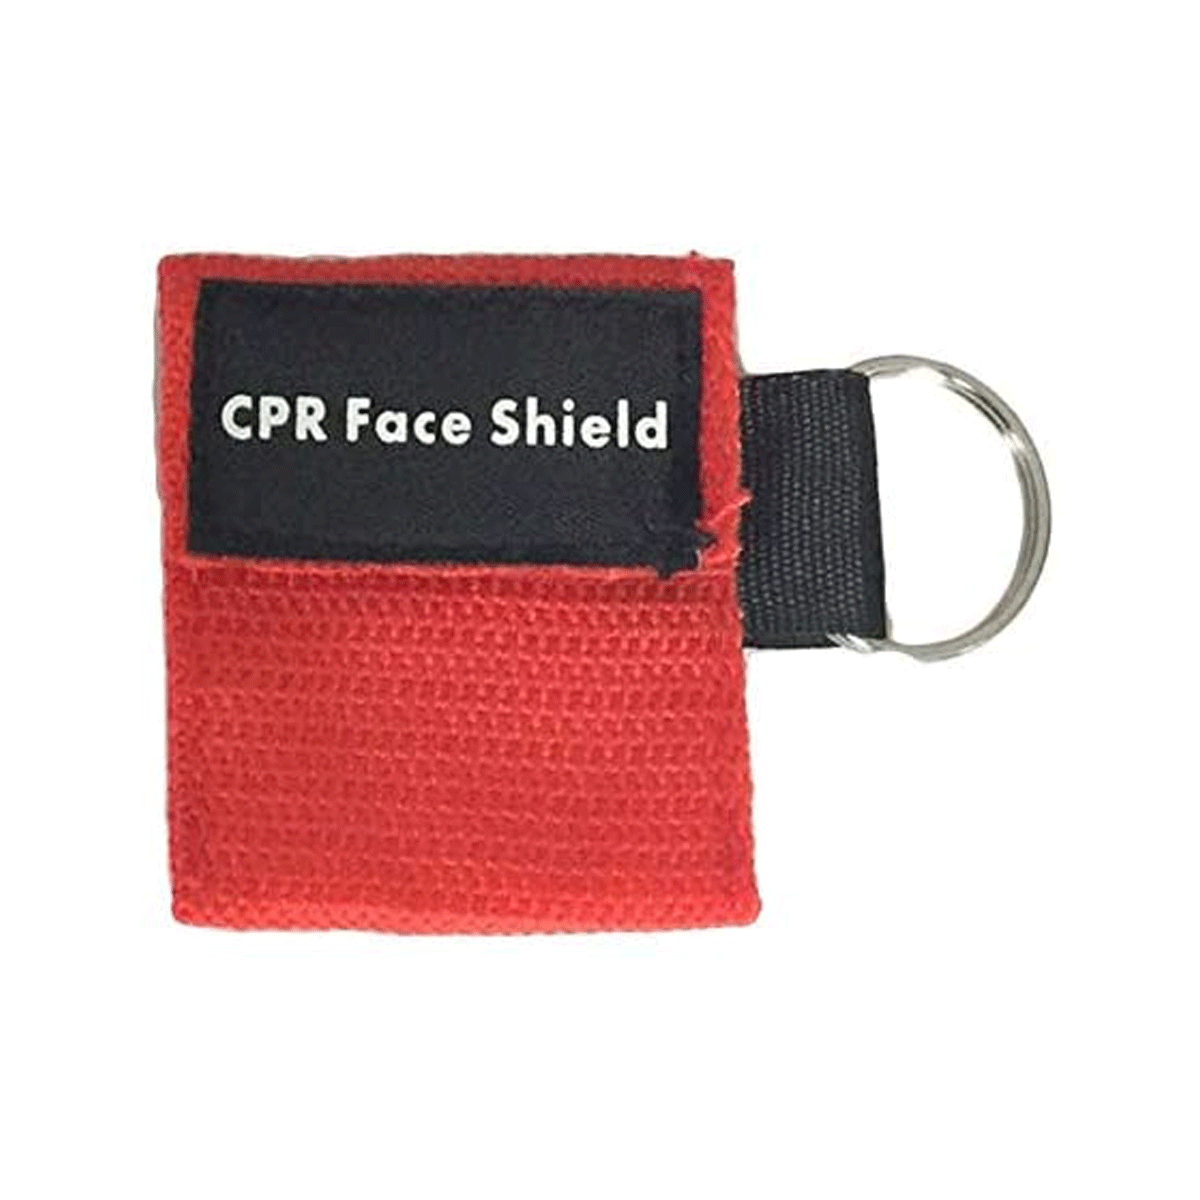 Medico Μάσκα CPR Face Shield σε Μπρελόκ Κόκκινο 1 Τεμάχιο